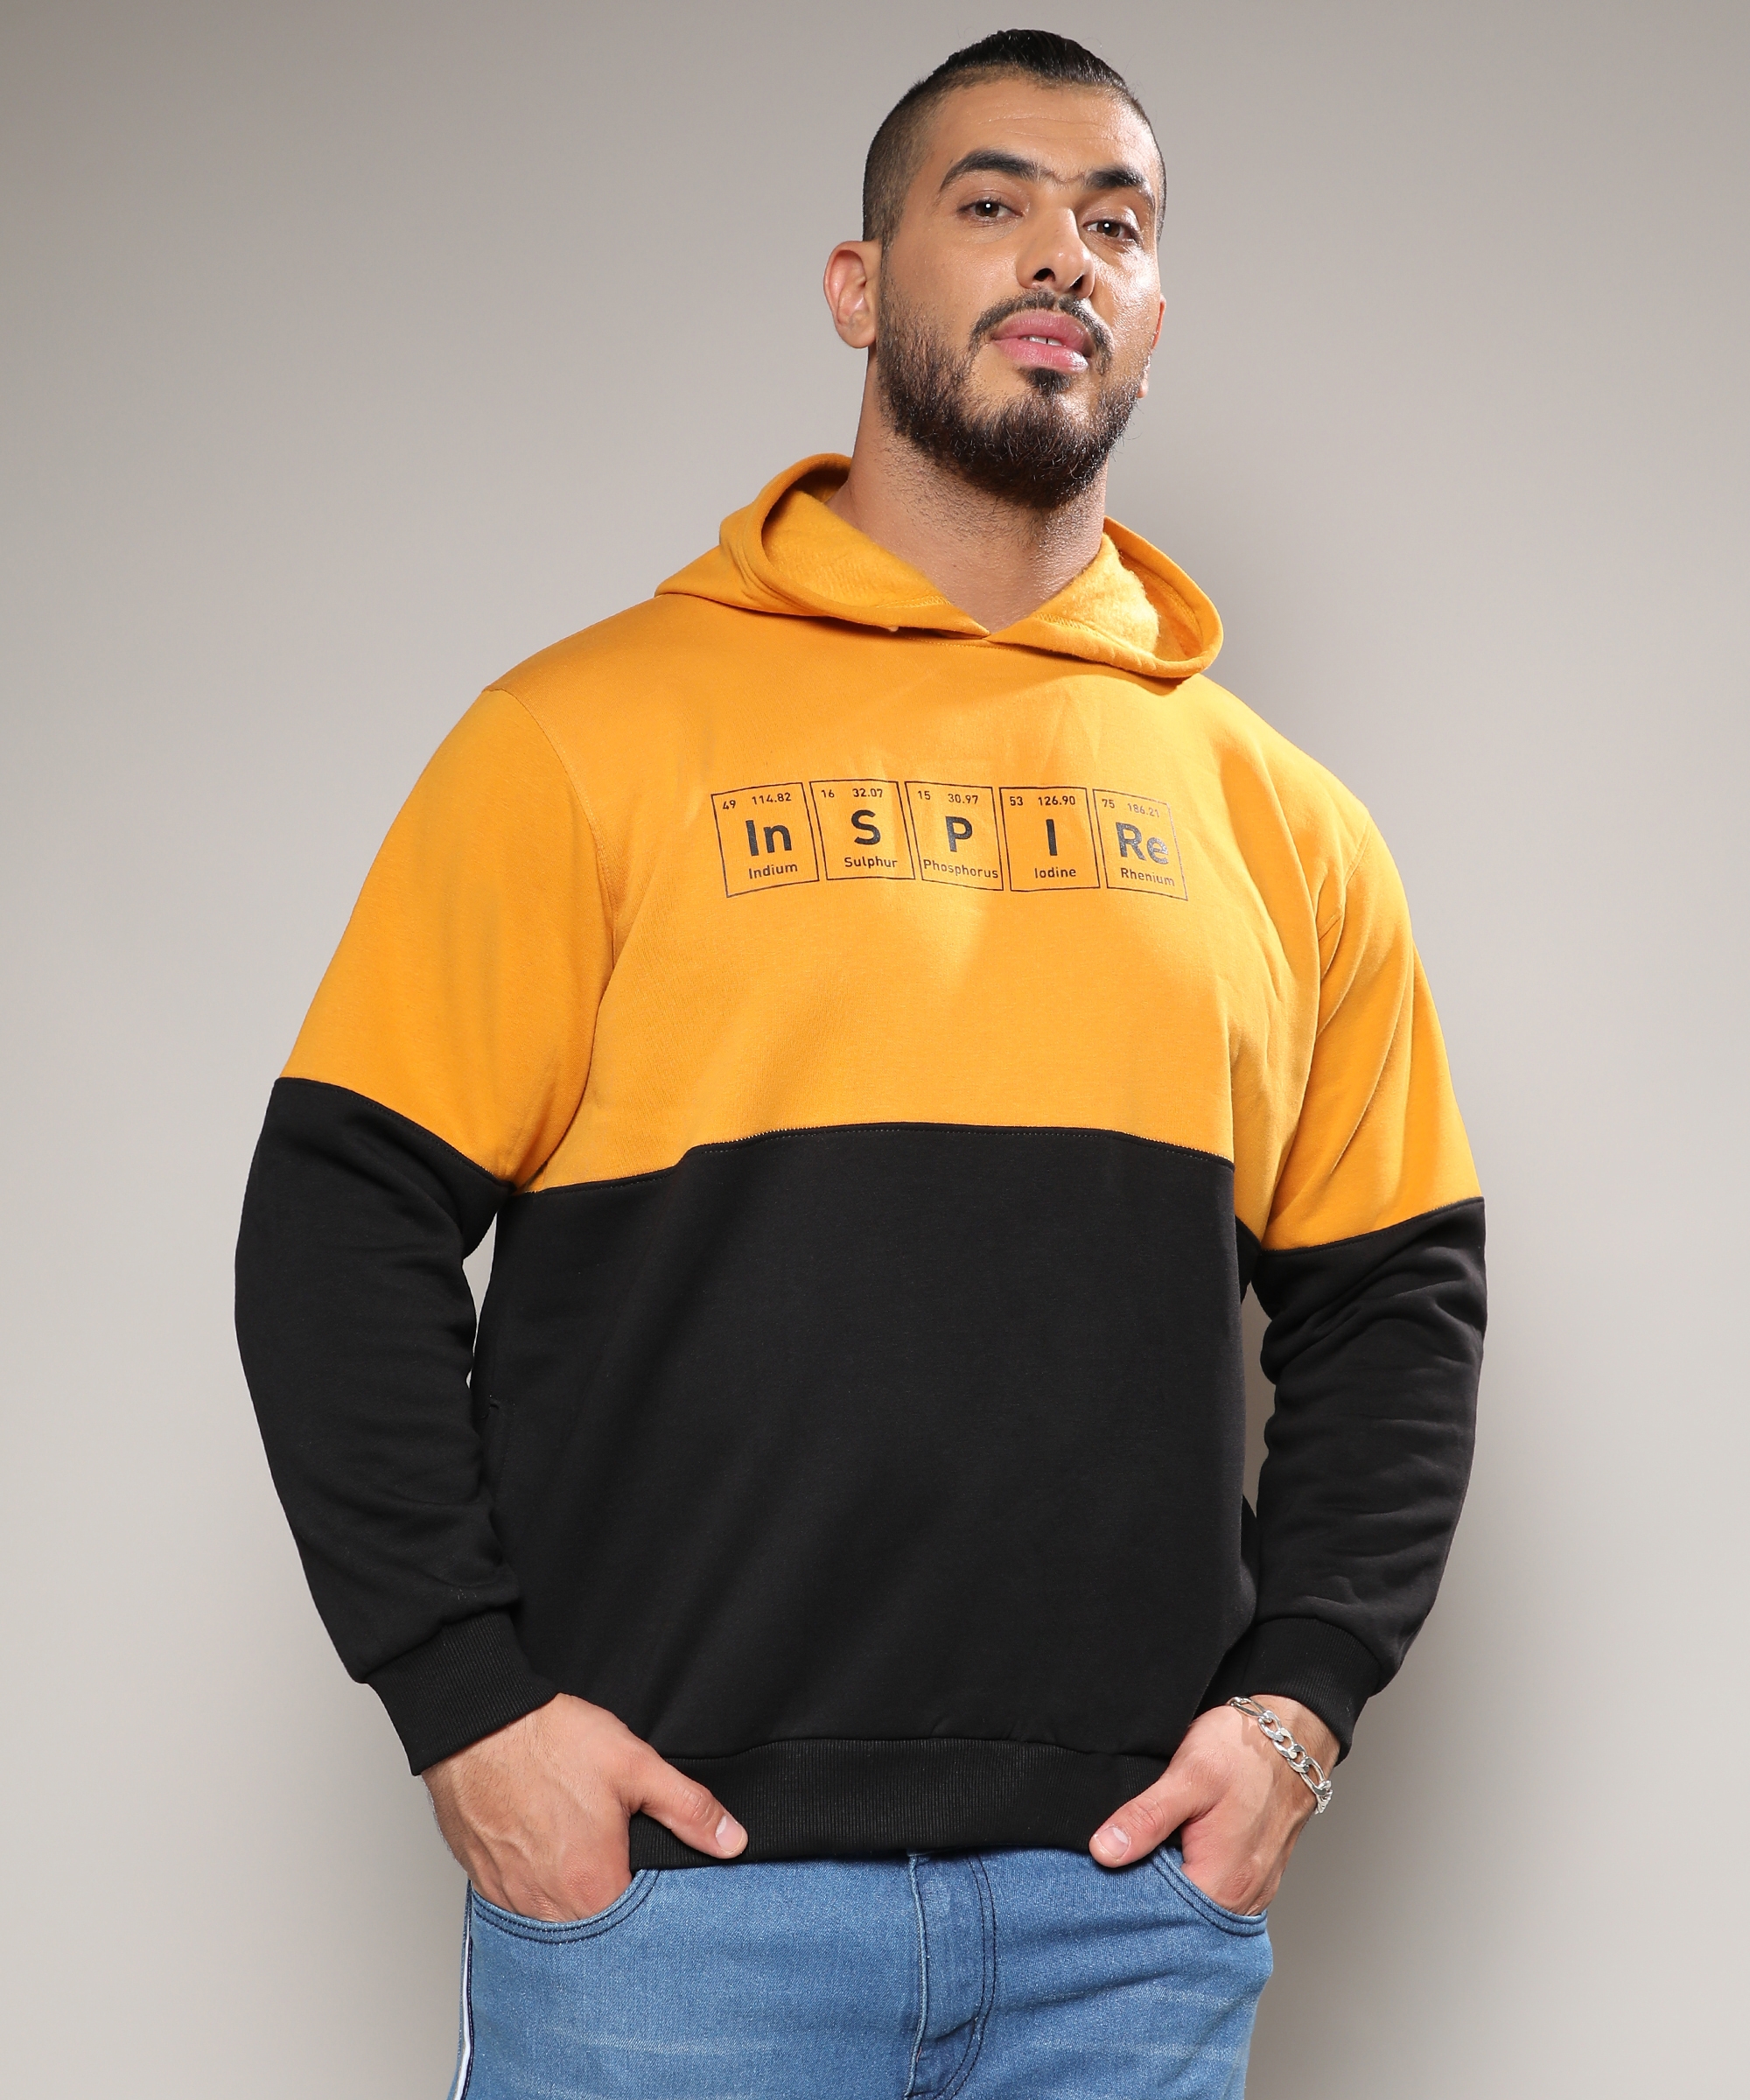 Instafab Plus | Men's Black & Mustard Yellow Inspire Hoodie With Kangaroo Pocket